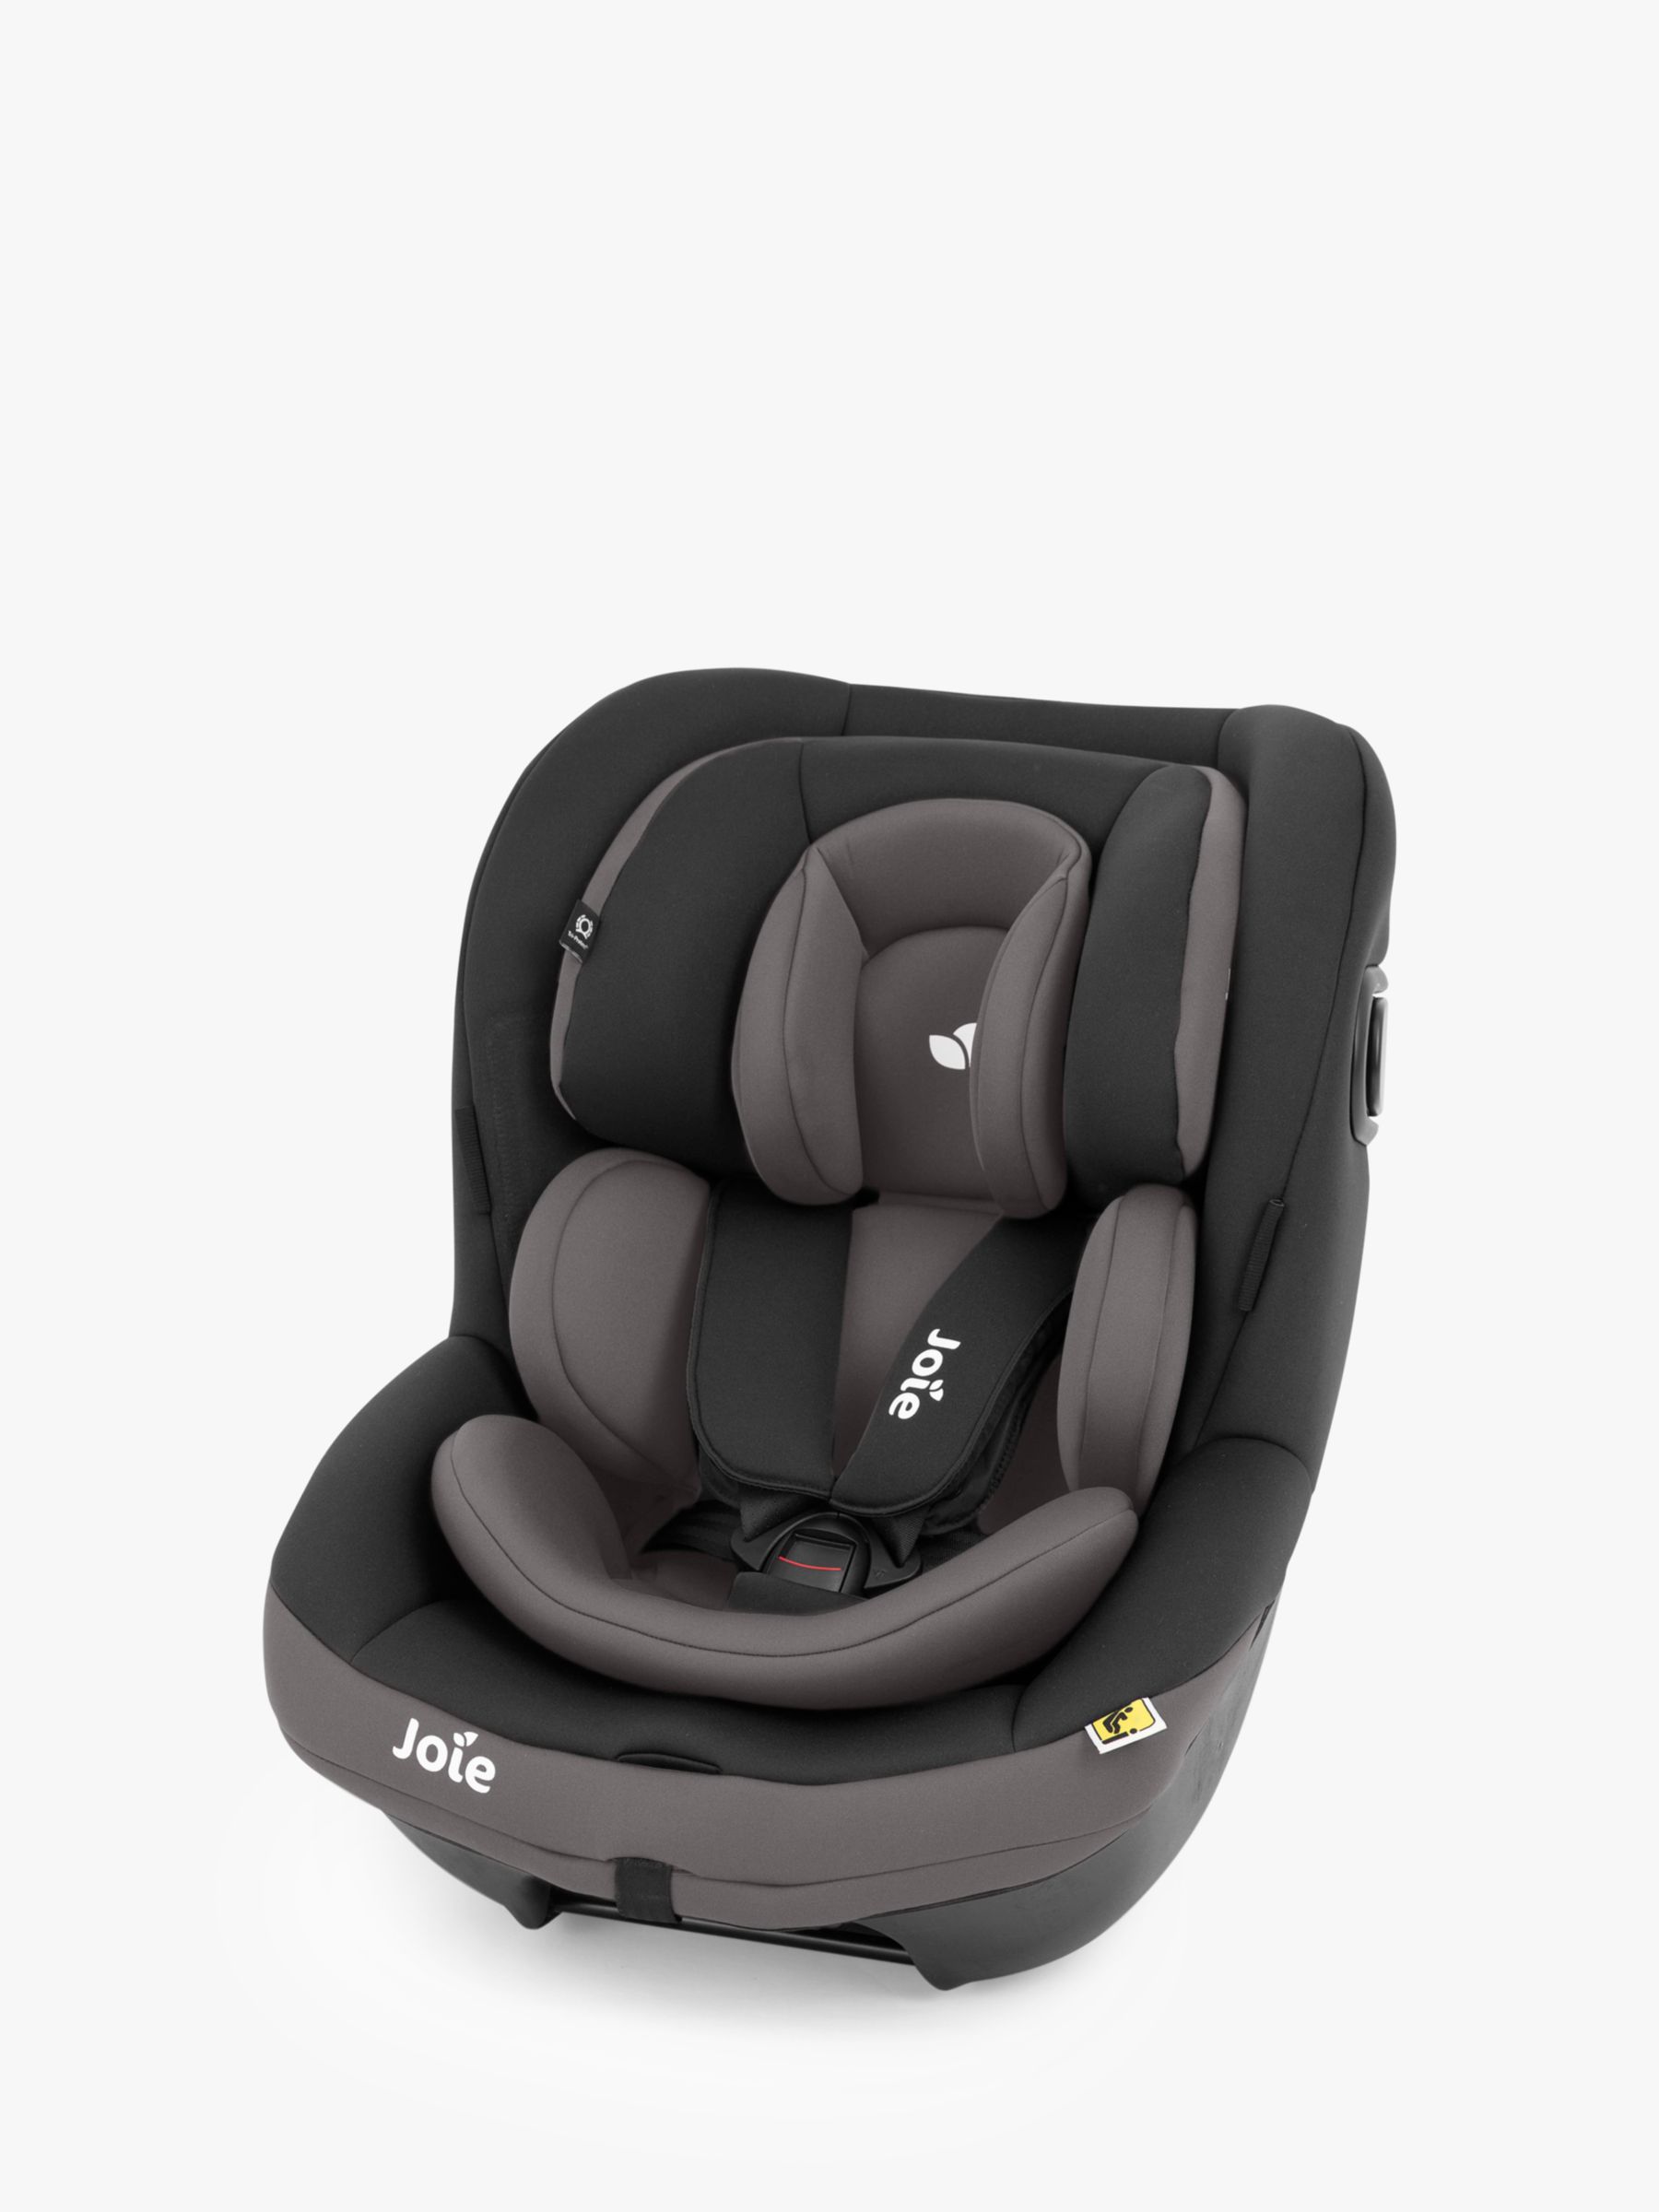 joie car seat isofix base